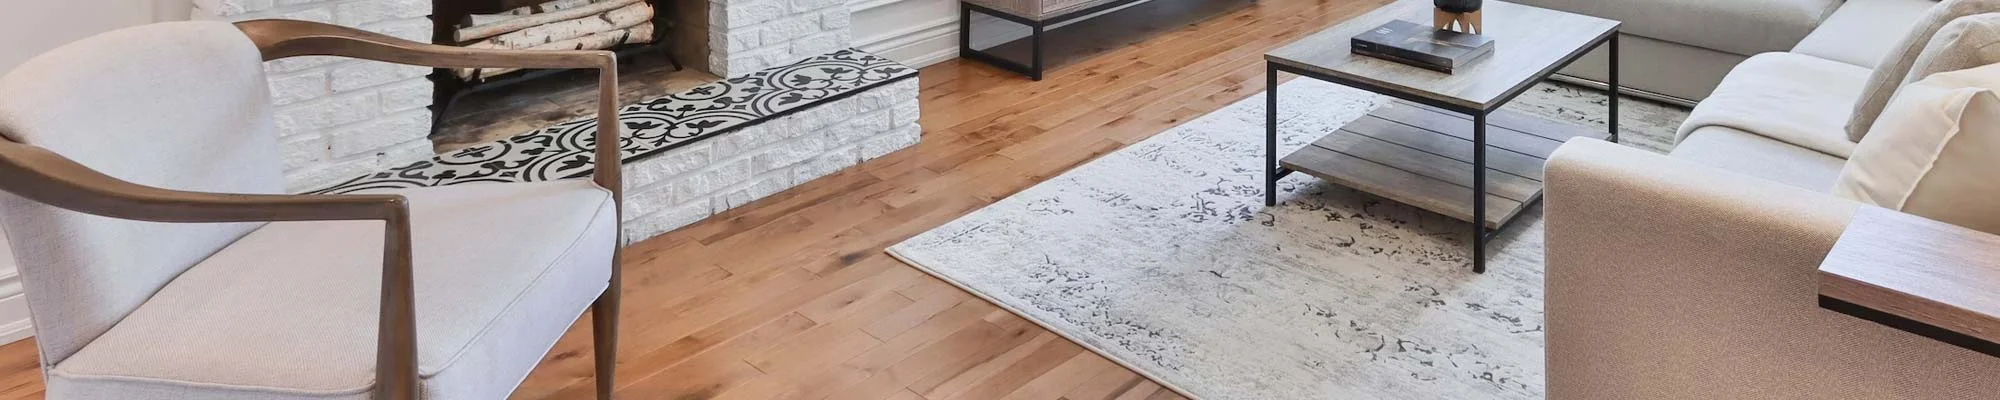 View Shop at Home Carpets' Flooring Product Catalog